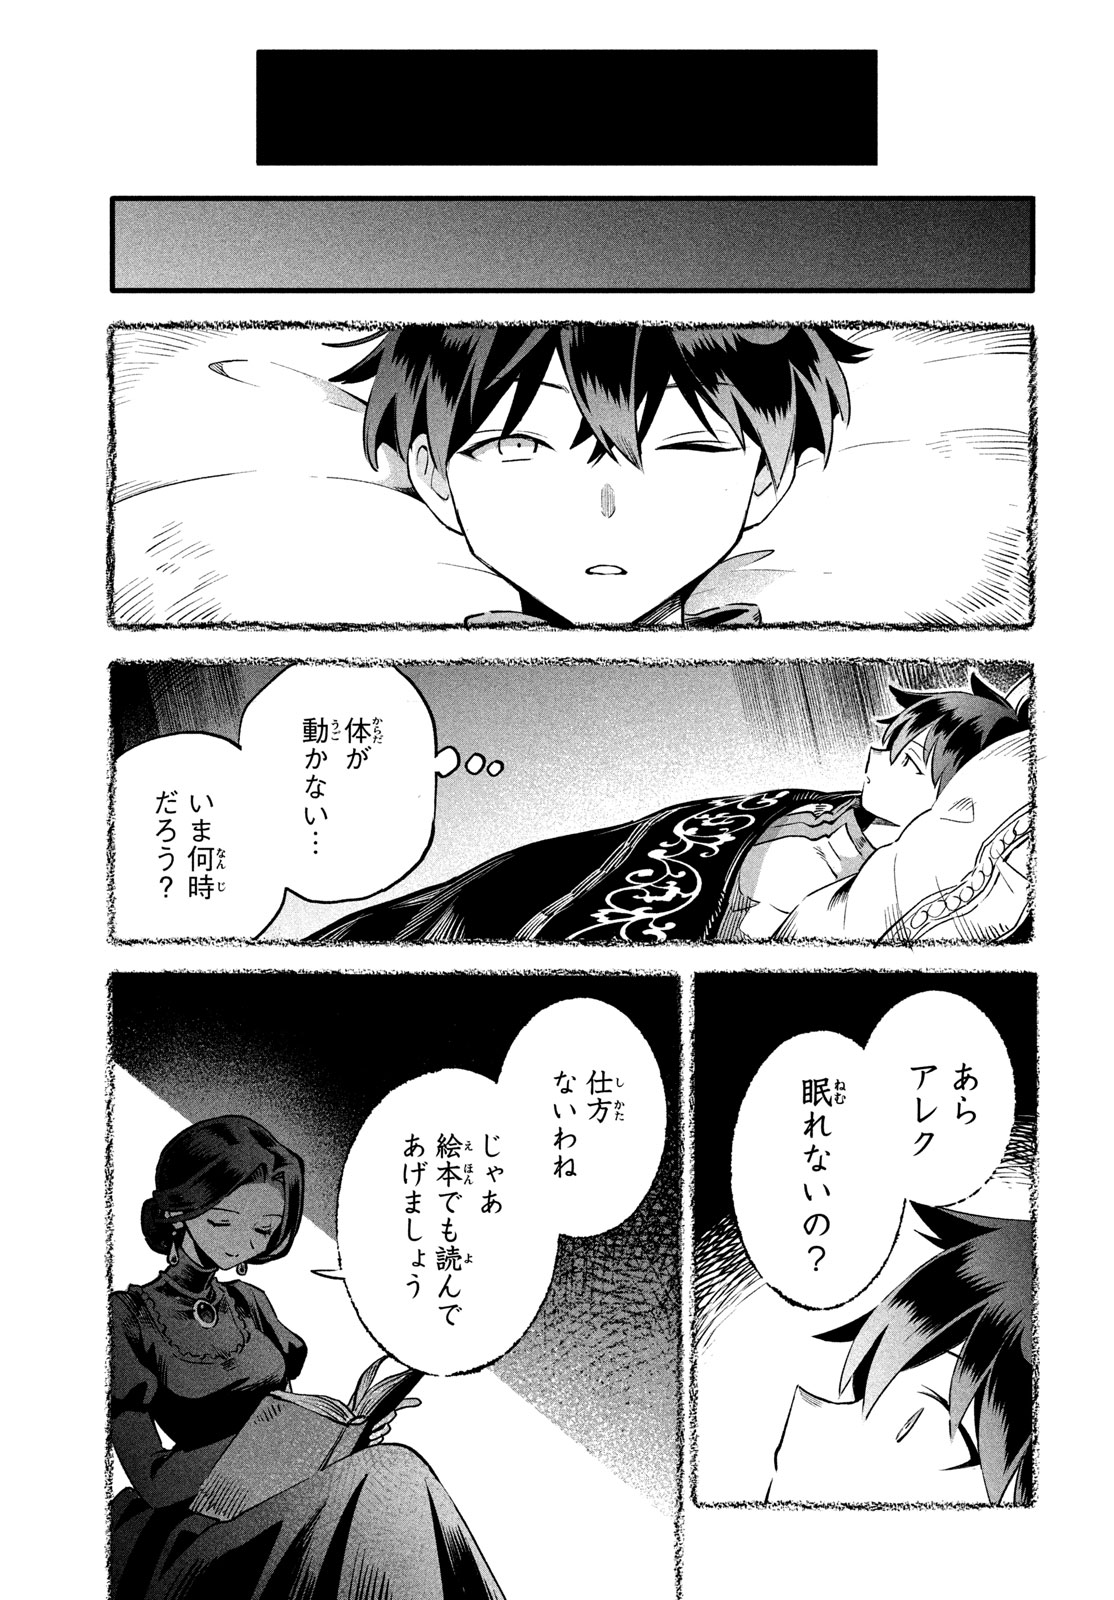 7-nin no Nemuri Hime - Chapter 48 - Page 7